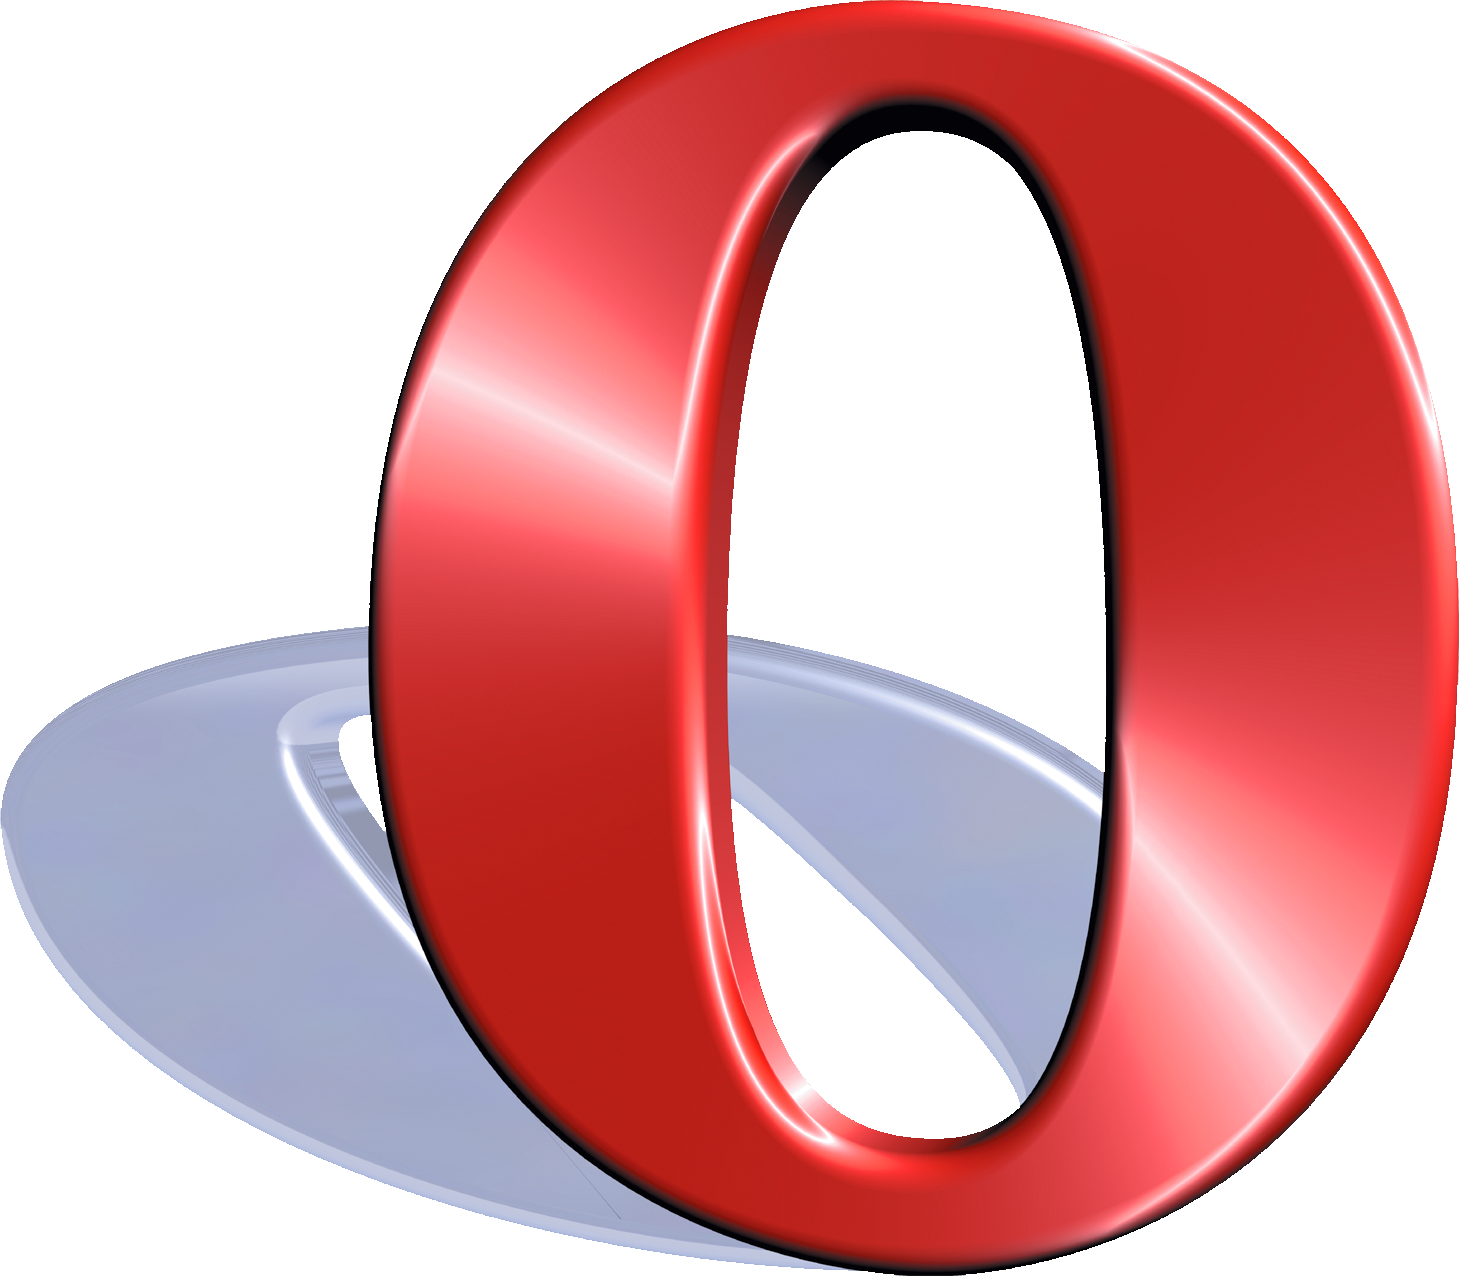 opera web browser wiki